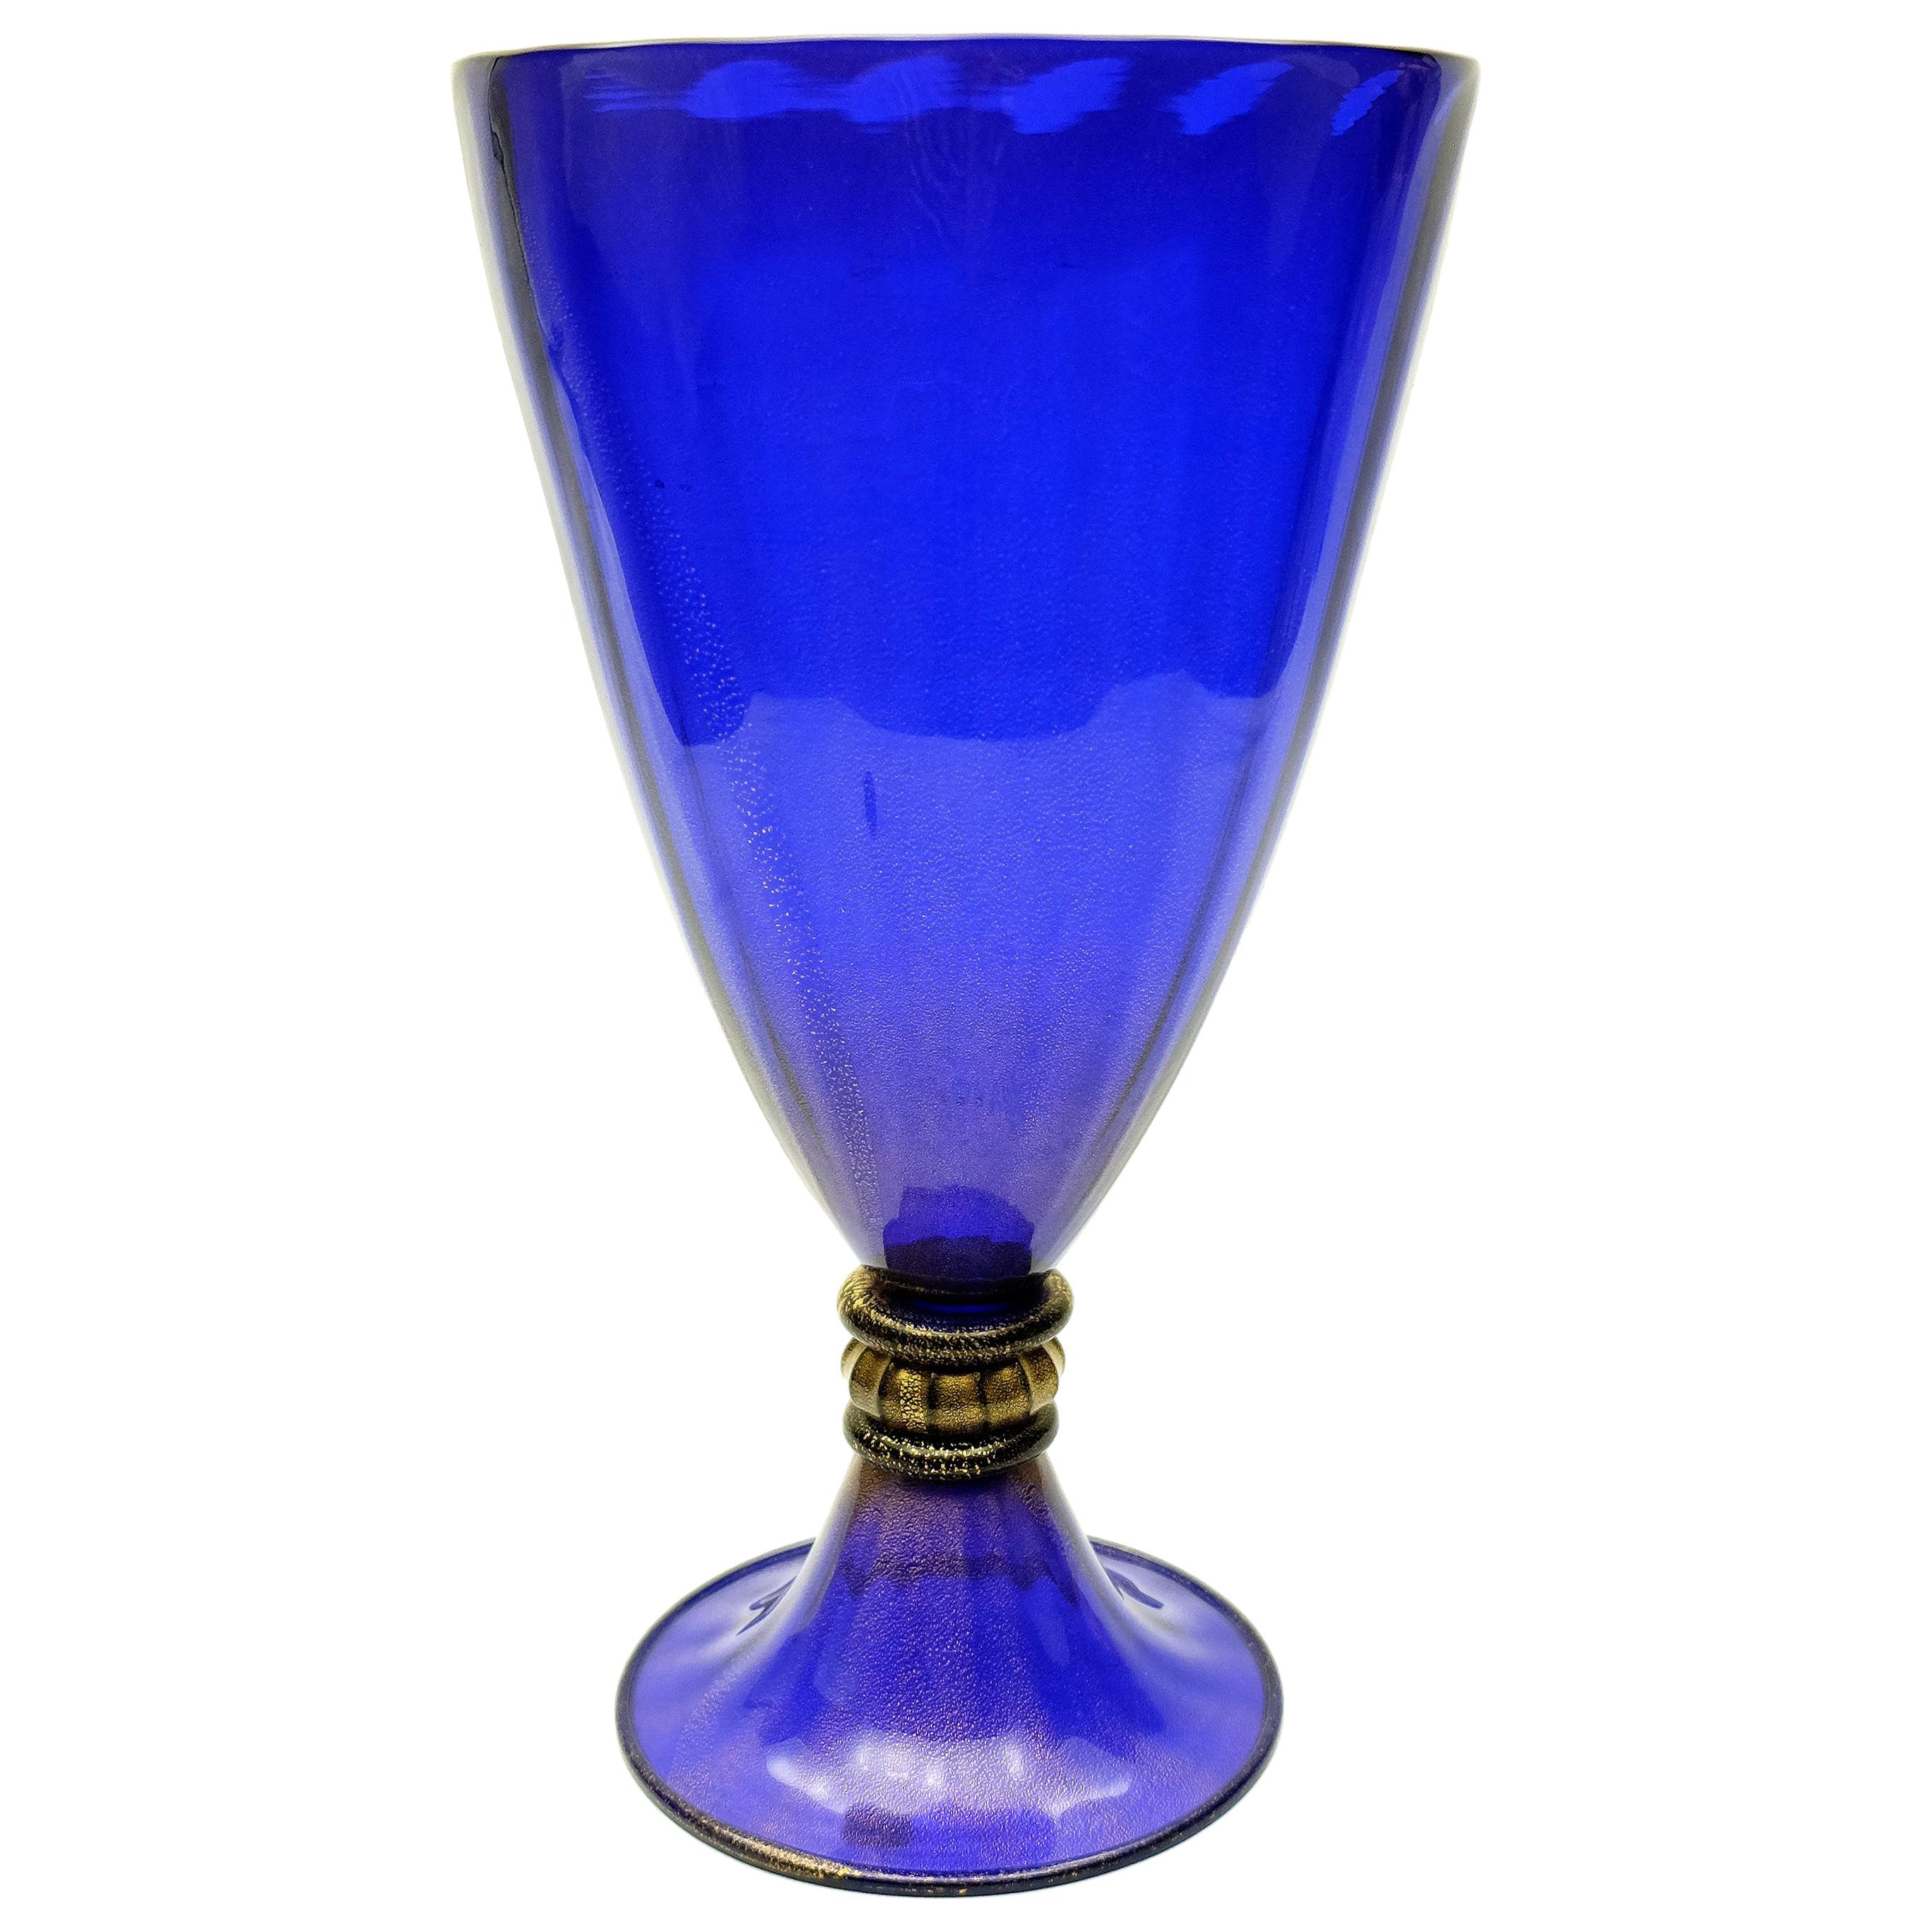 Murano Glass Gold-Infused Vase by Gabbiani Venezia, Italy